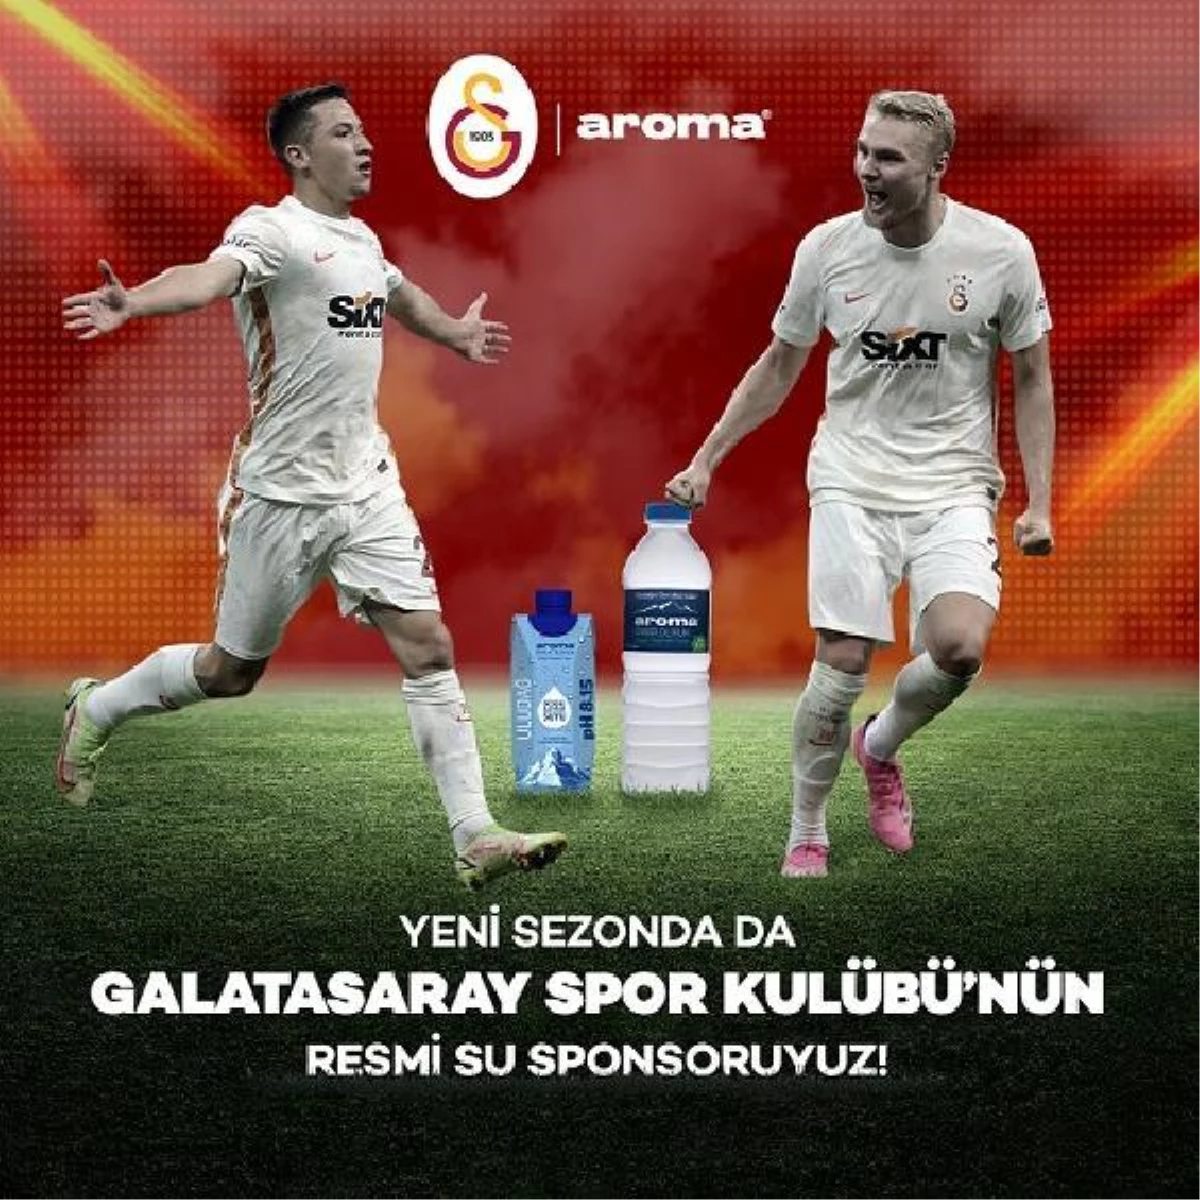 Galatasaray Spor Kulübü\'nün resmi su sponsoru Aroma oldu